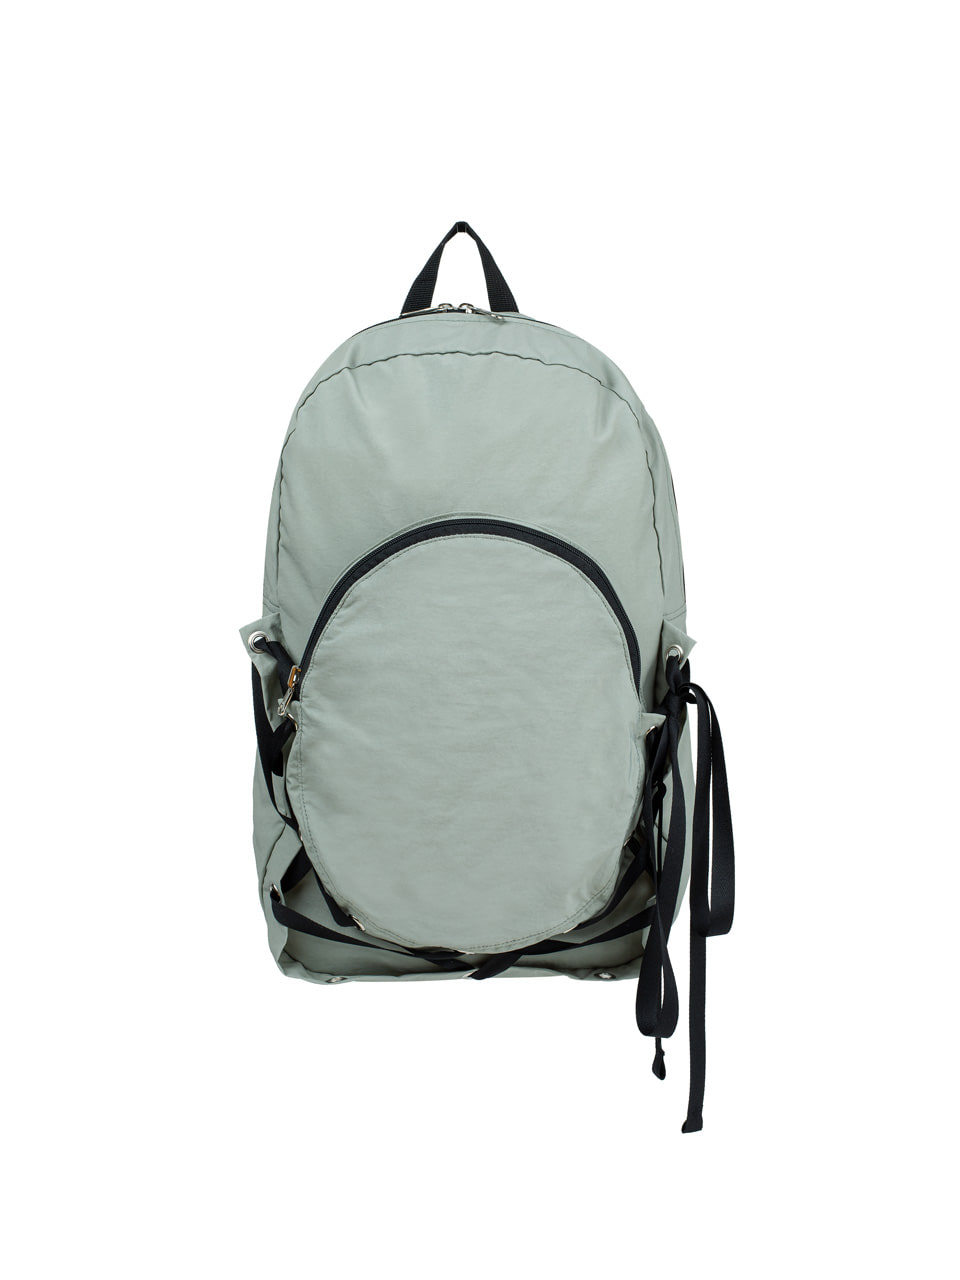 Nest Backpack - Mint Green